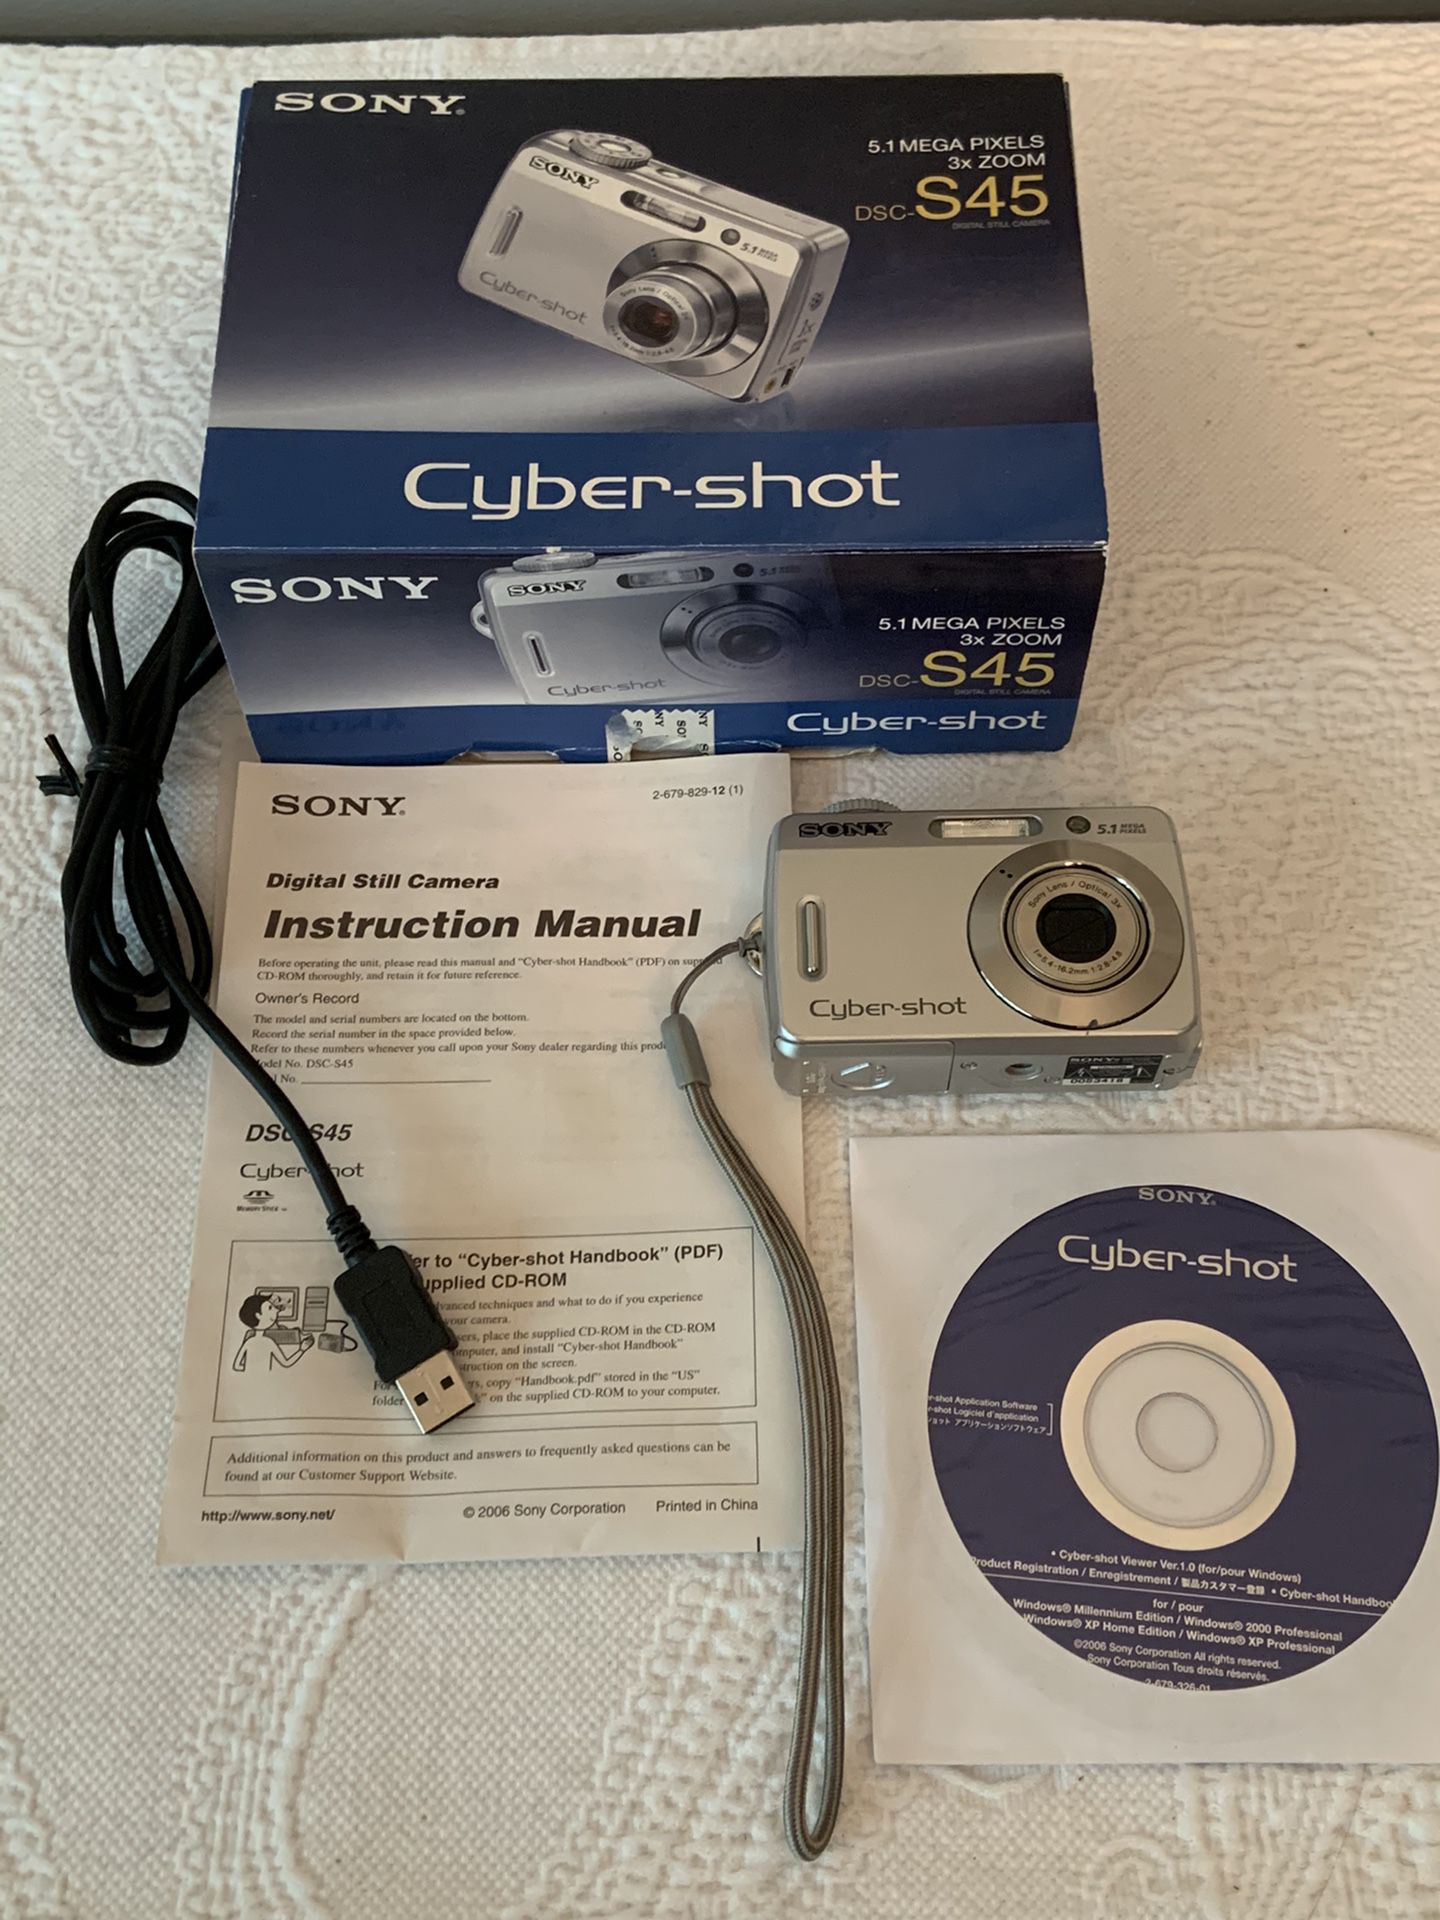 Sony Cyber-shot s45 camera 5.1 megapixels/3x Zoom